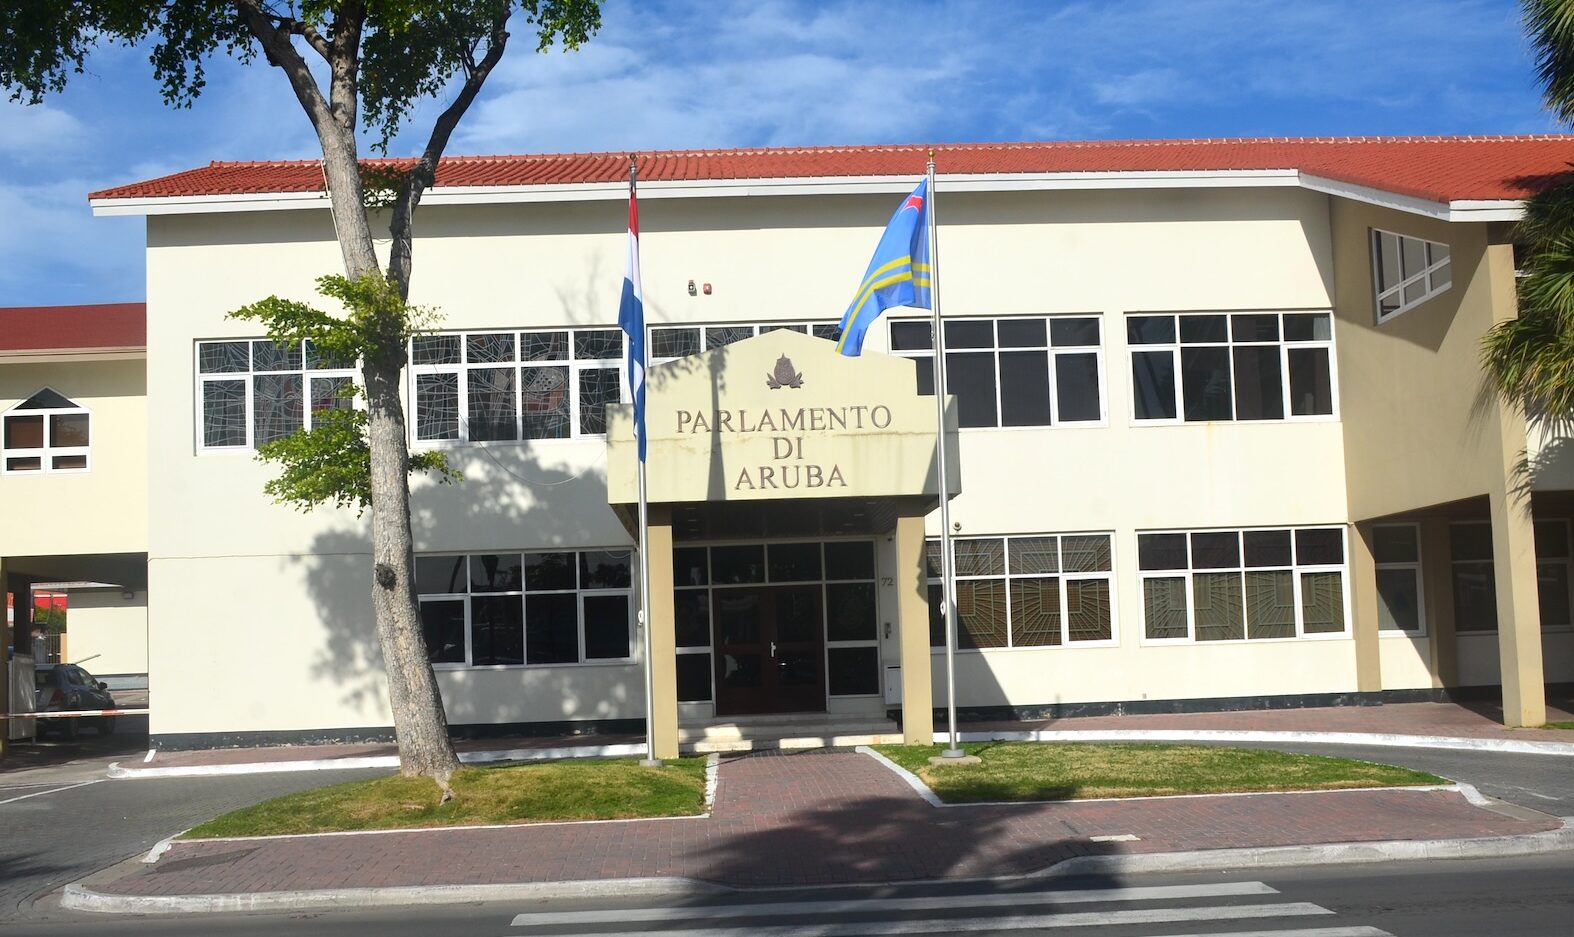 Parliament of Aruba in Oranjestad, Aruba